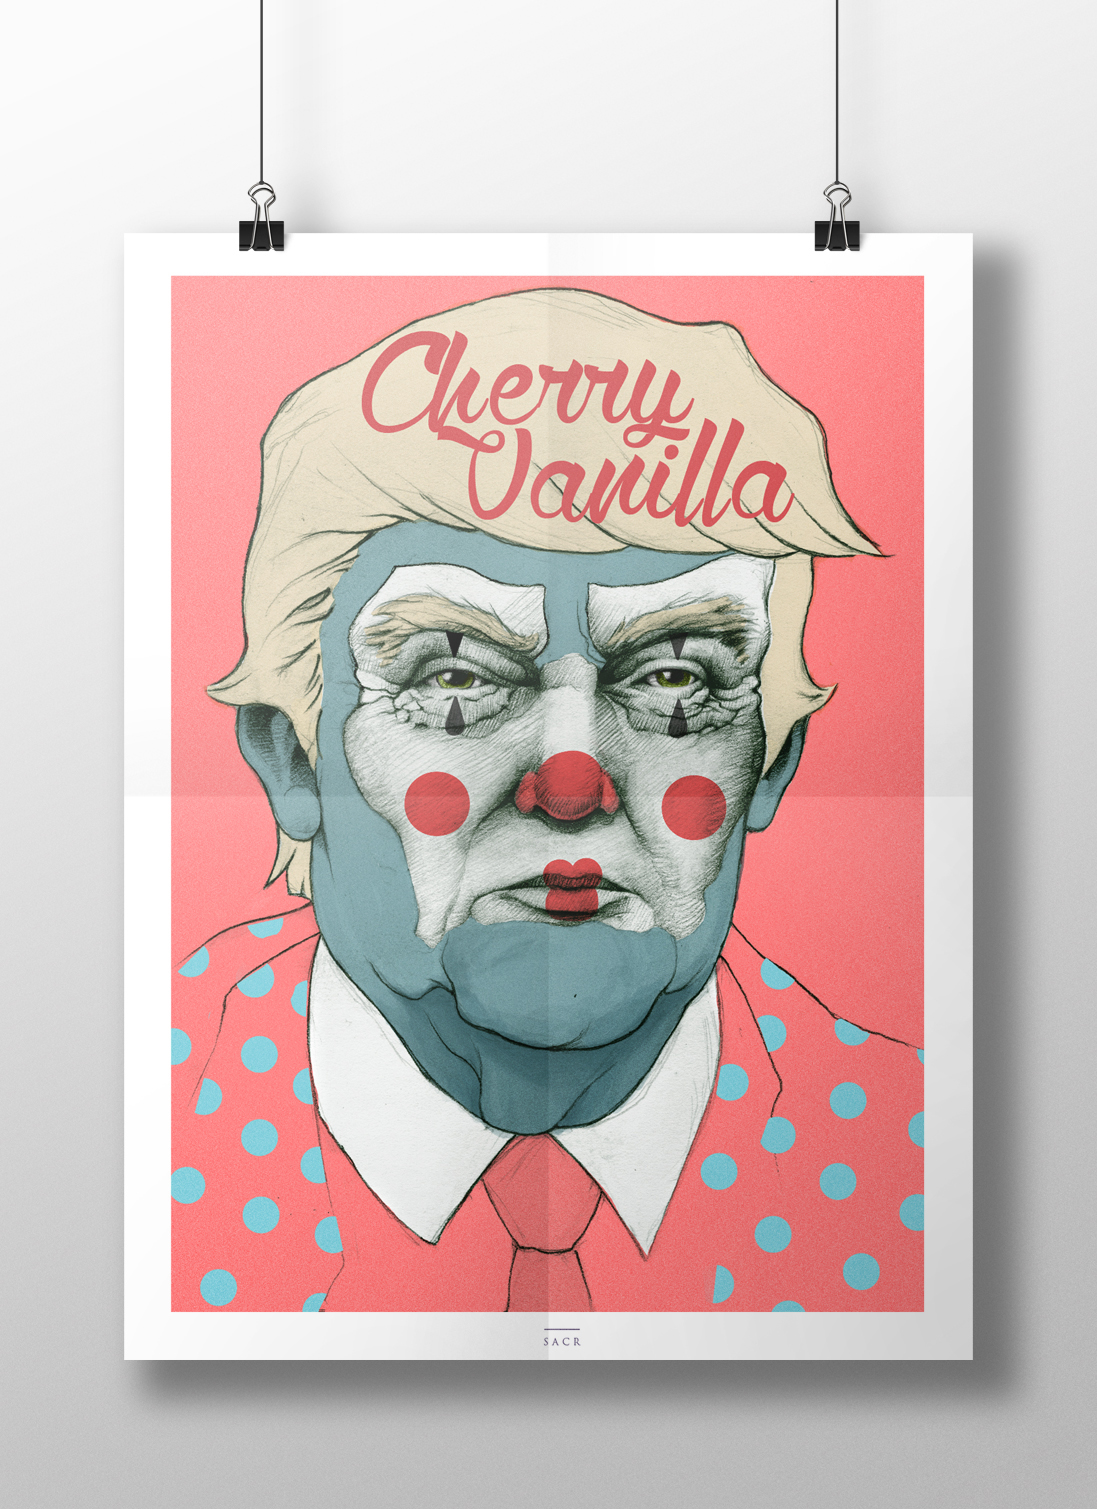 donald Trump joke portrait We Shall Overcomb Cherry Vanilla Icecream overcombed asshole